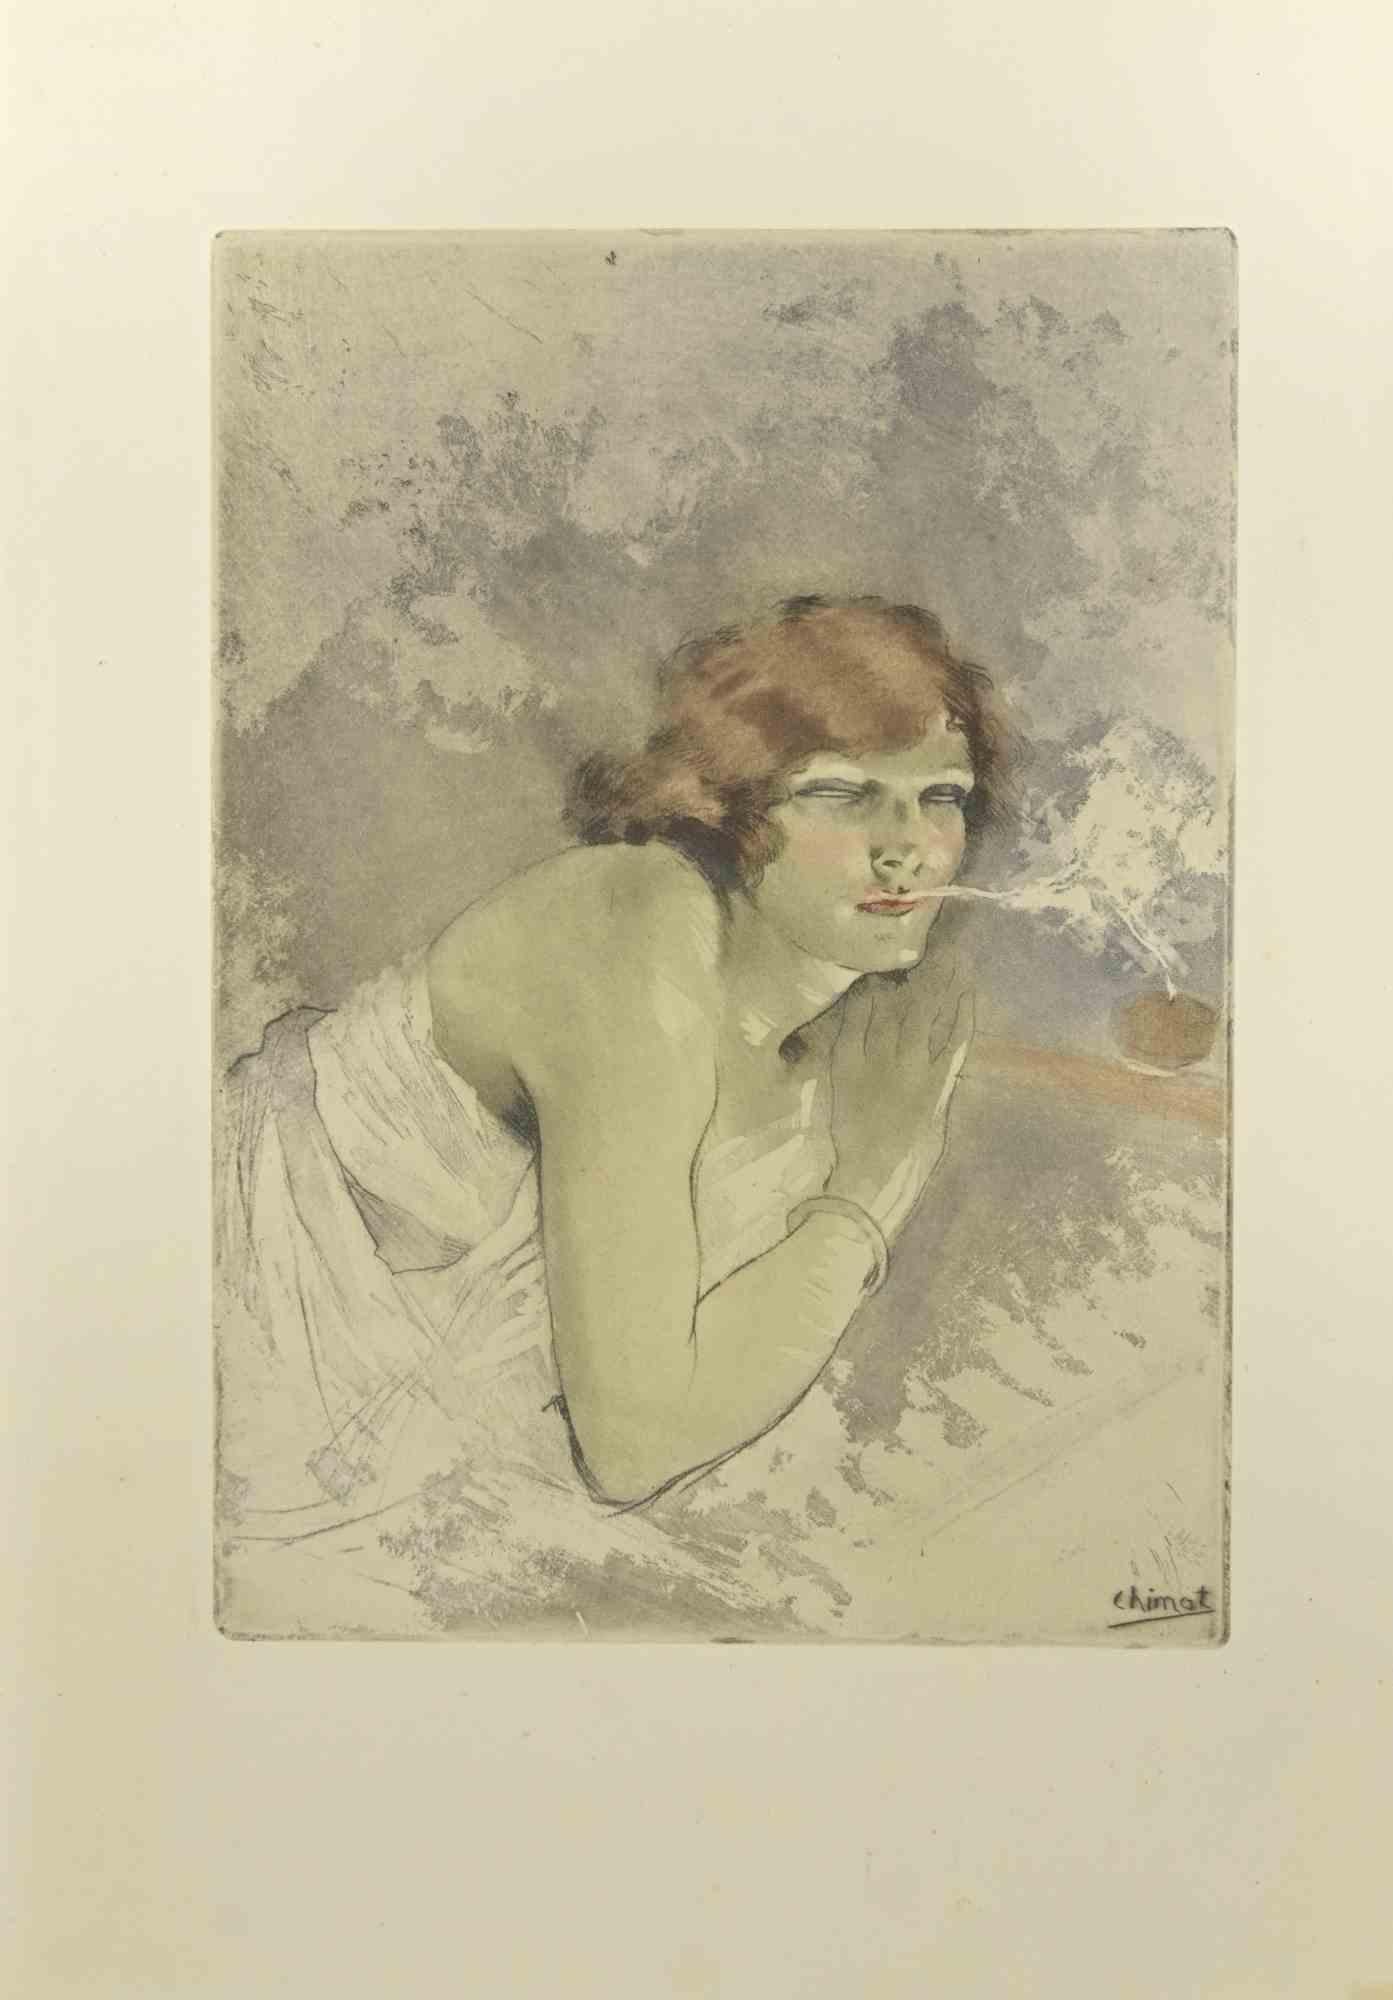 La jeune fille qui fume -  Gravure d'Edouard Chimot - années 1930